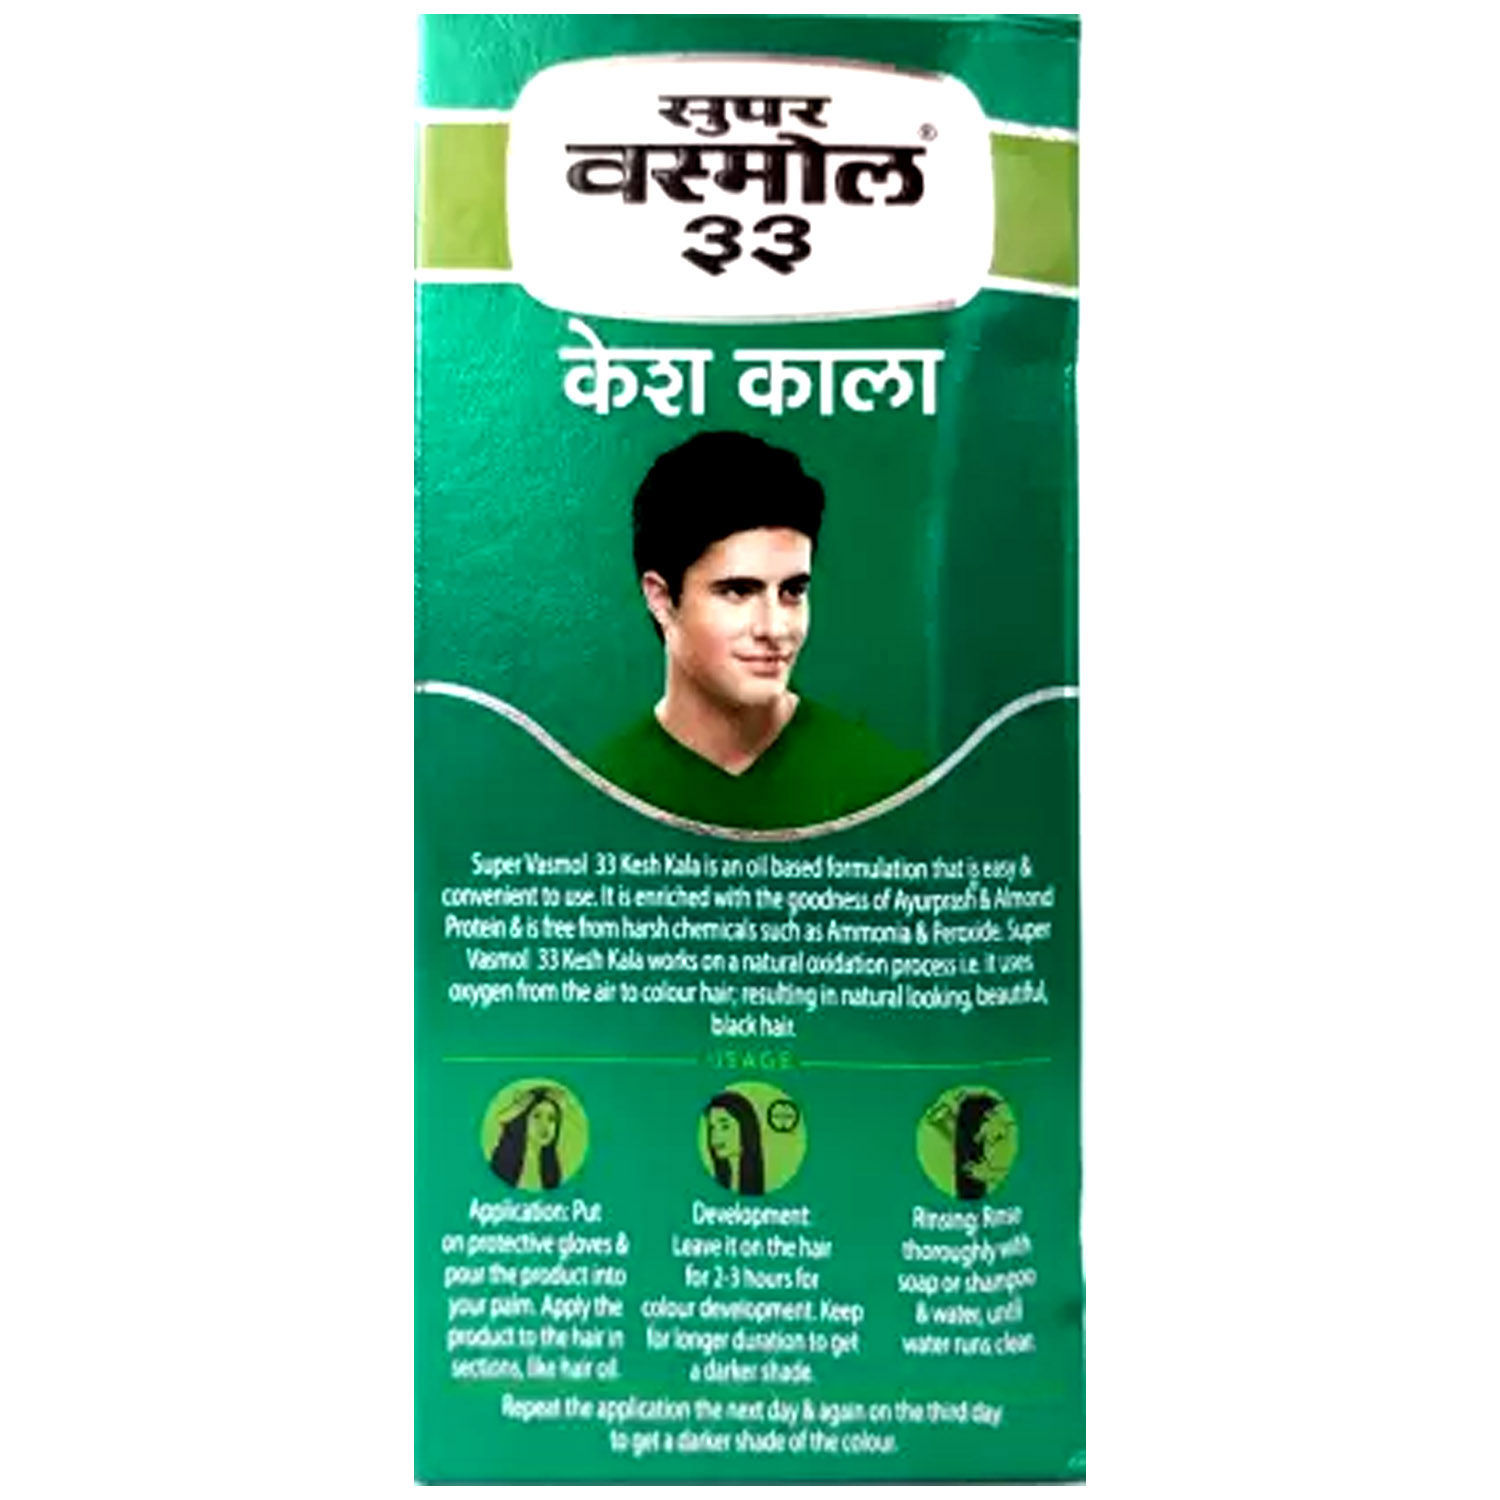 Super Vasmol 33 Kesh Kala Hair Oil, 50 ml Price, Uses, Side Effects,  Composition - Apollo Pharmacy